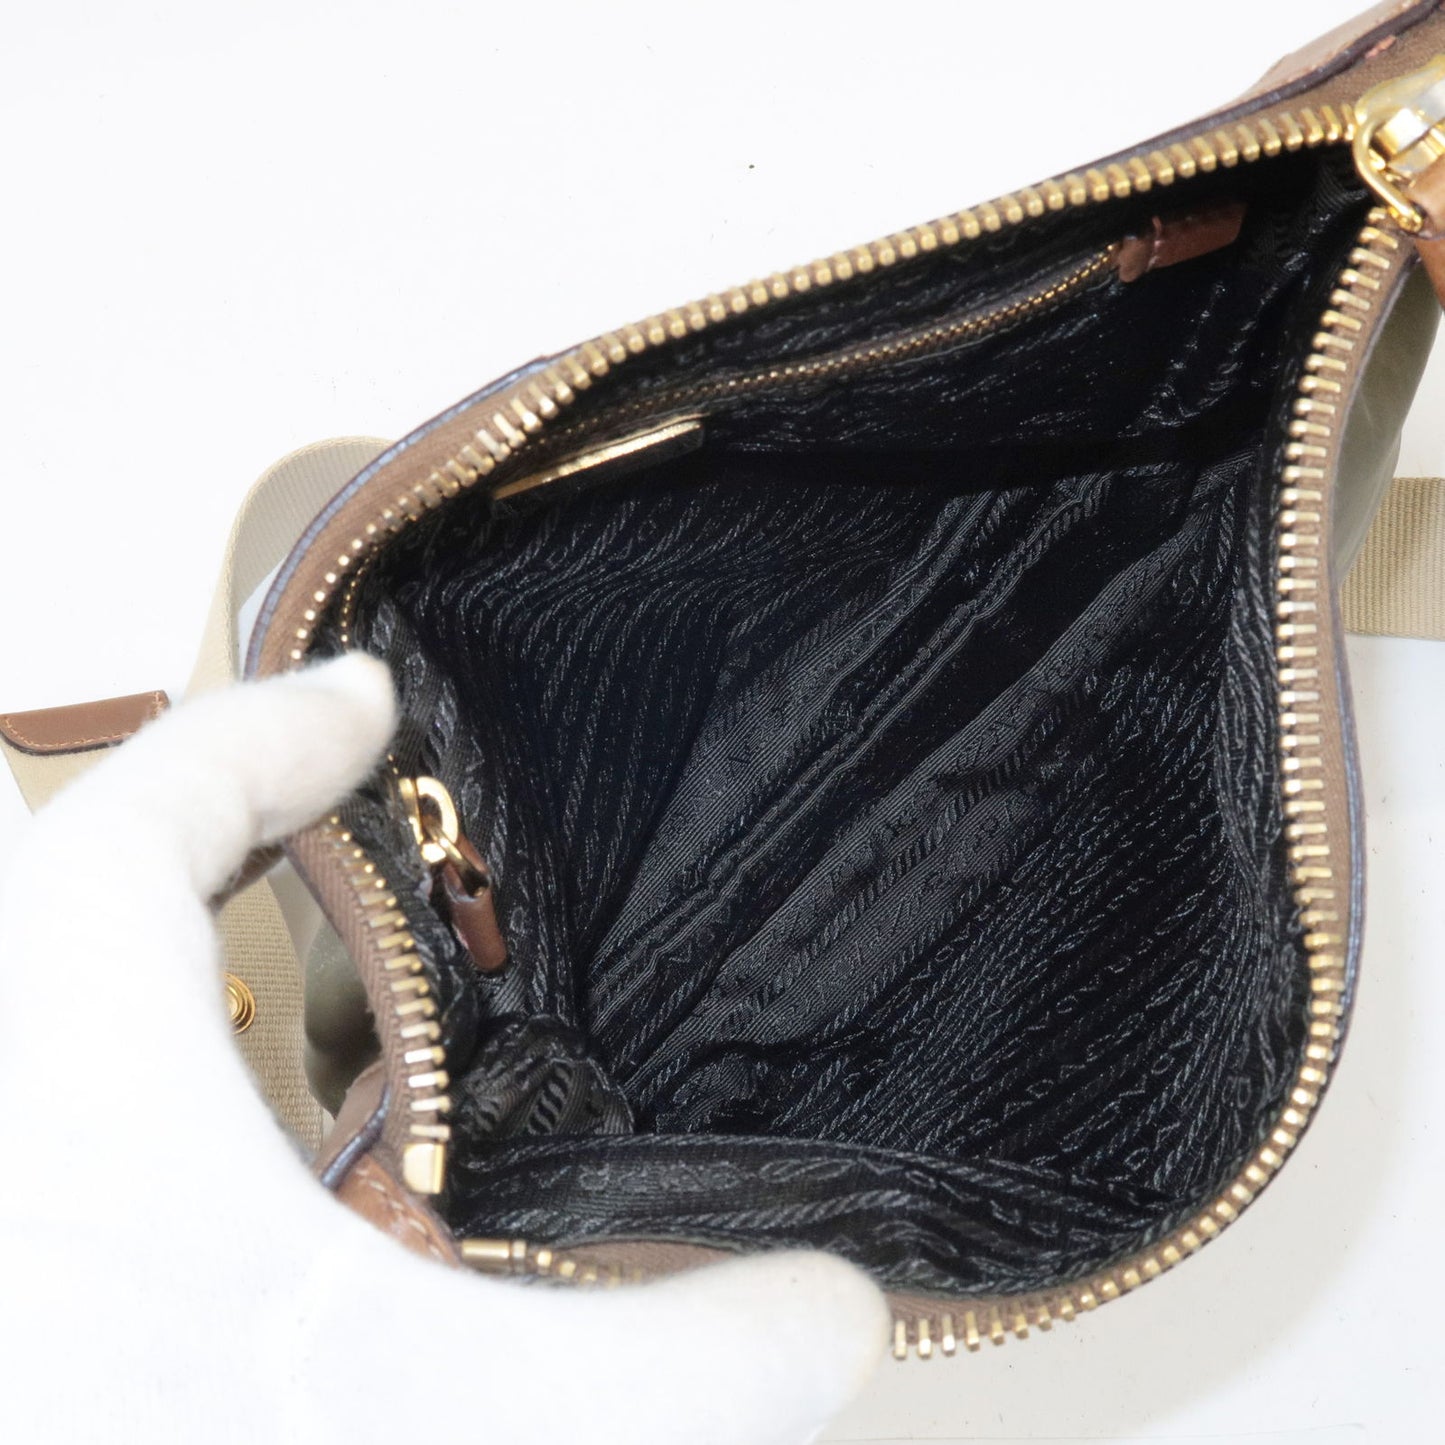 PRADA Nylon Leather Shoulder Bag Khaki Brown